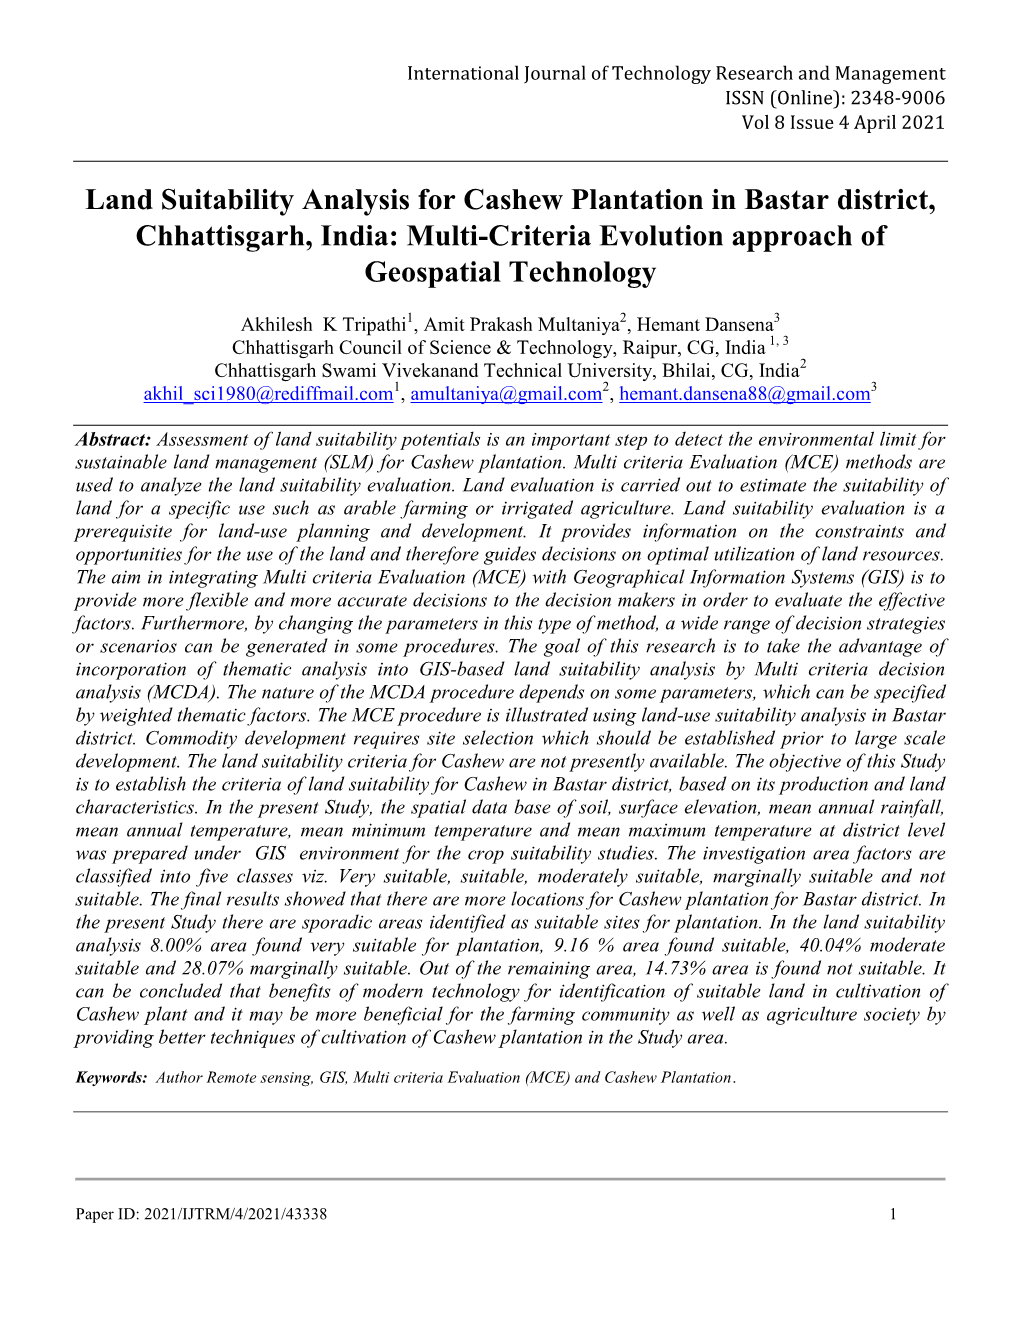 Land Suitability Analysis for Cashew Plantation in Bastar District, Chhattisgarh, India: Multi-Criteria Evolution Approach of Geospatial Technology